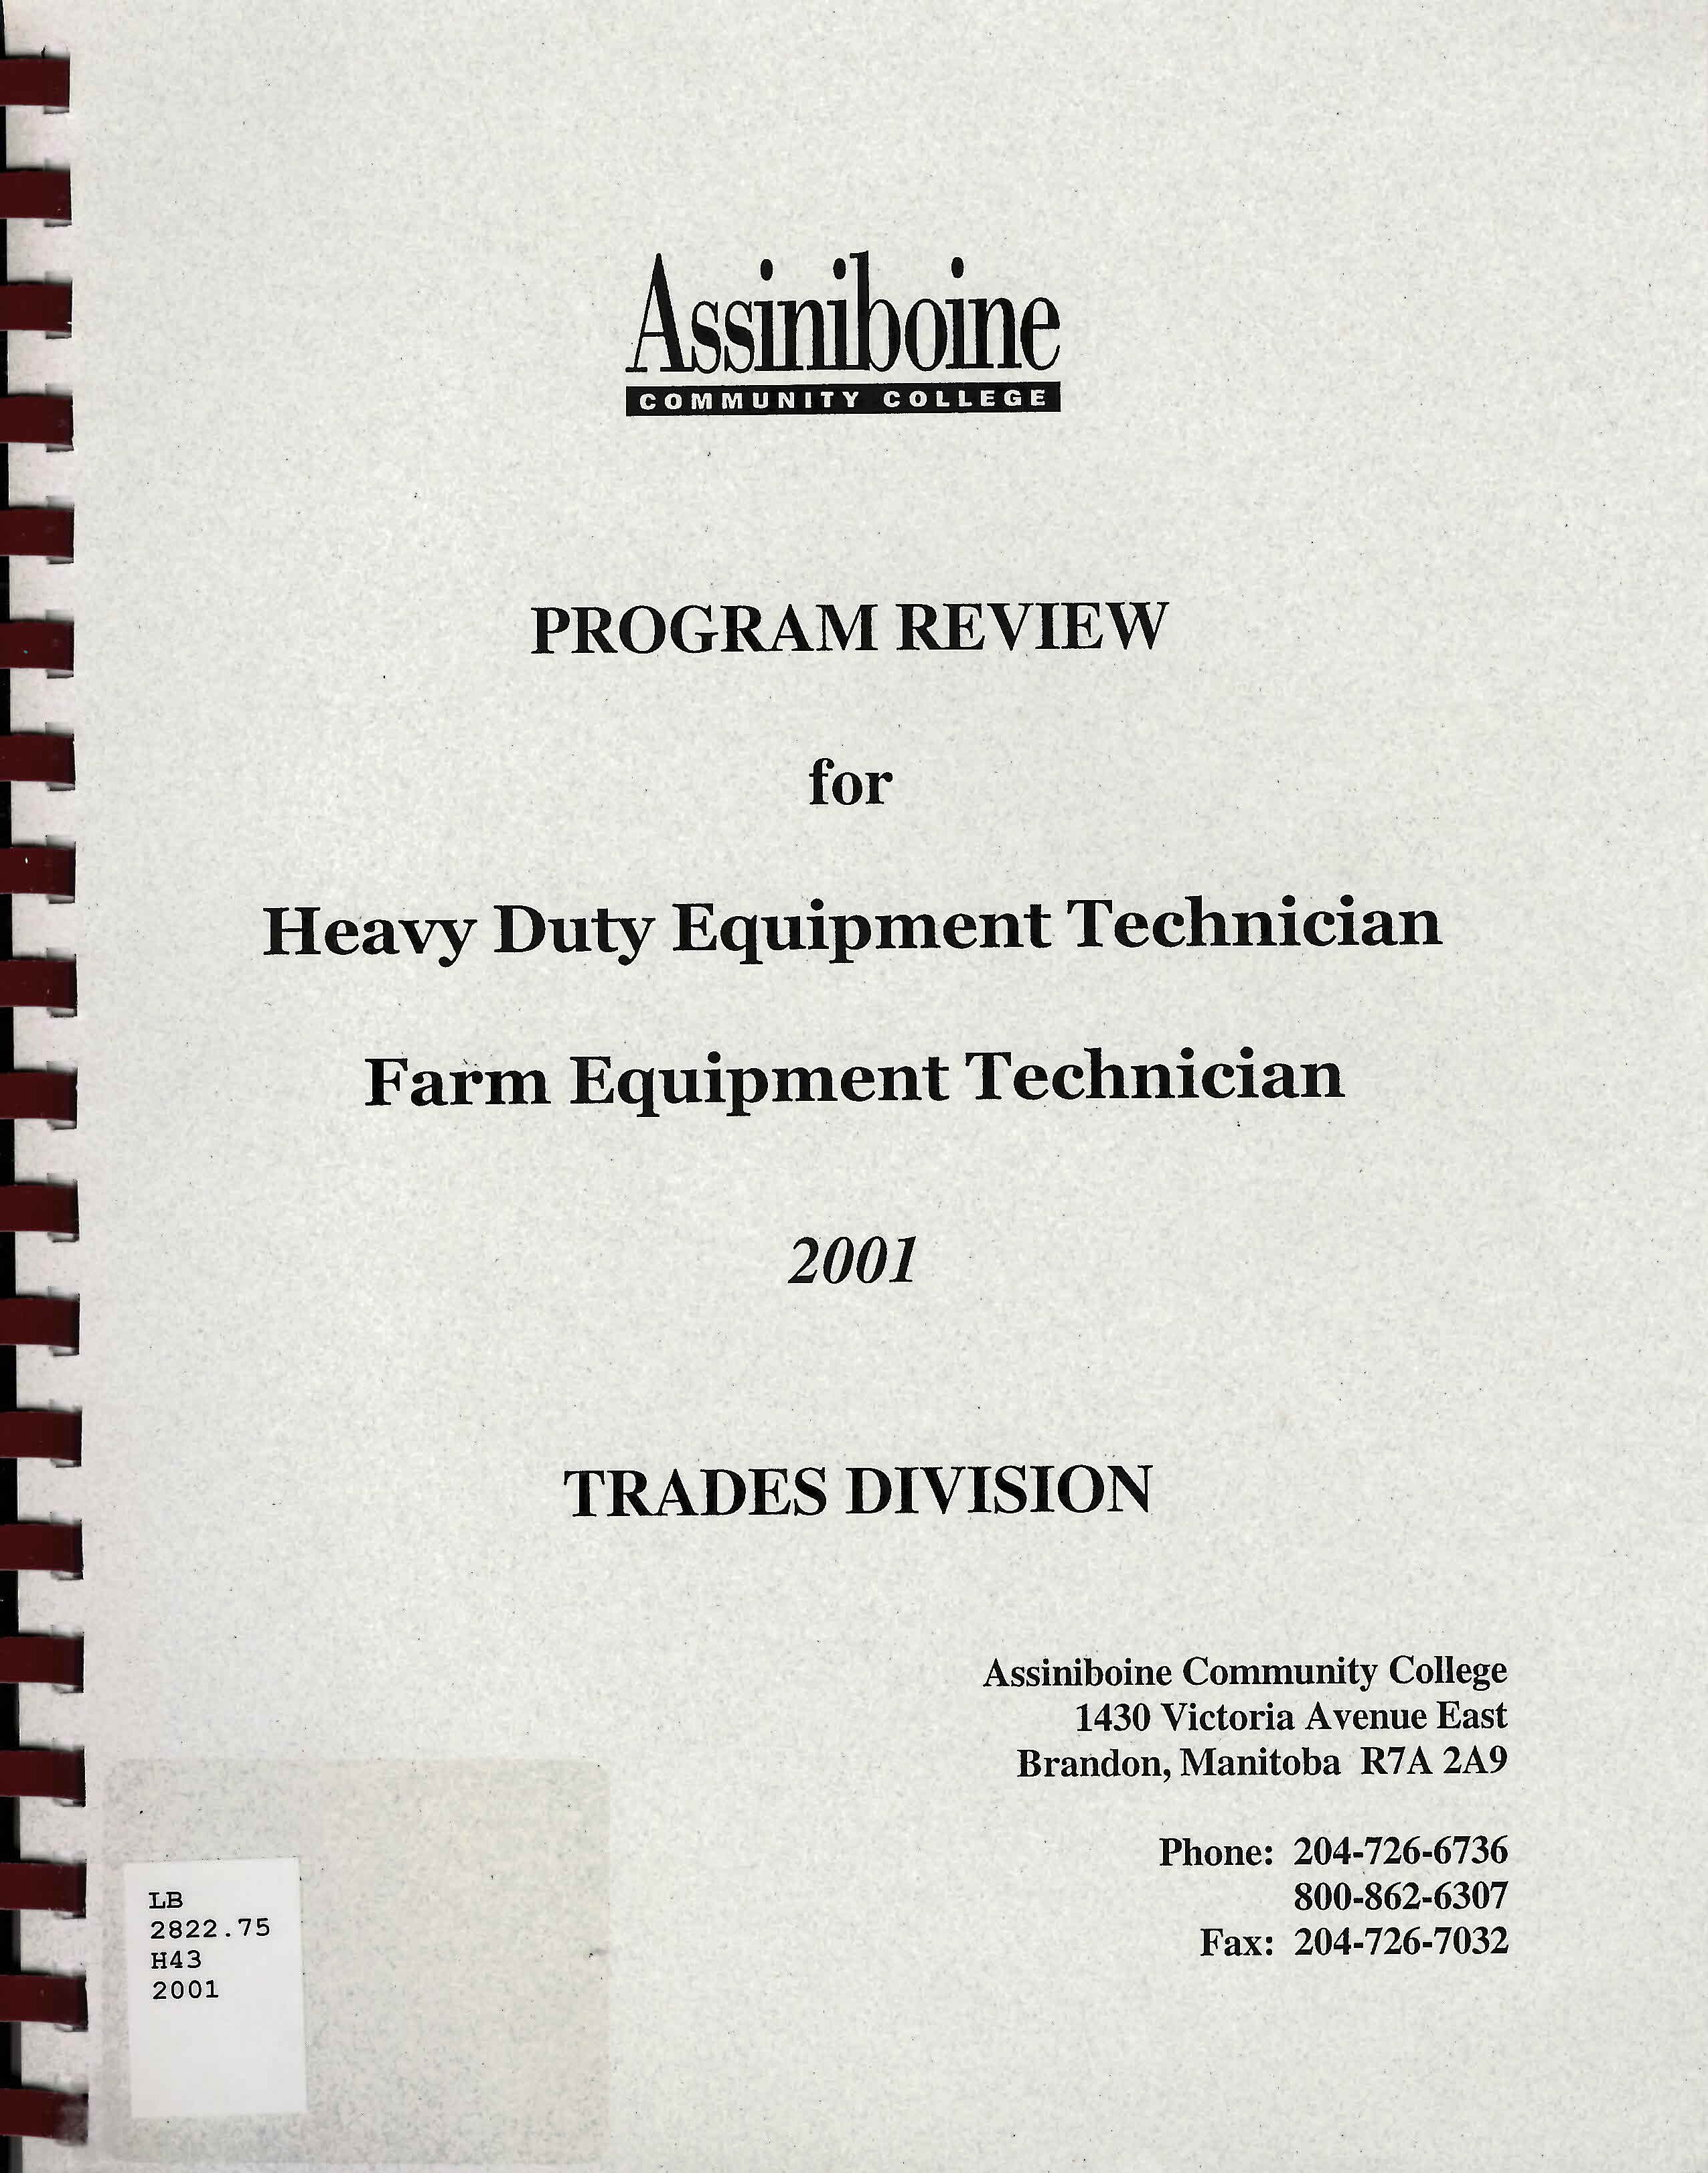 Heavy duty equipment technician : farm equipment technician